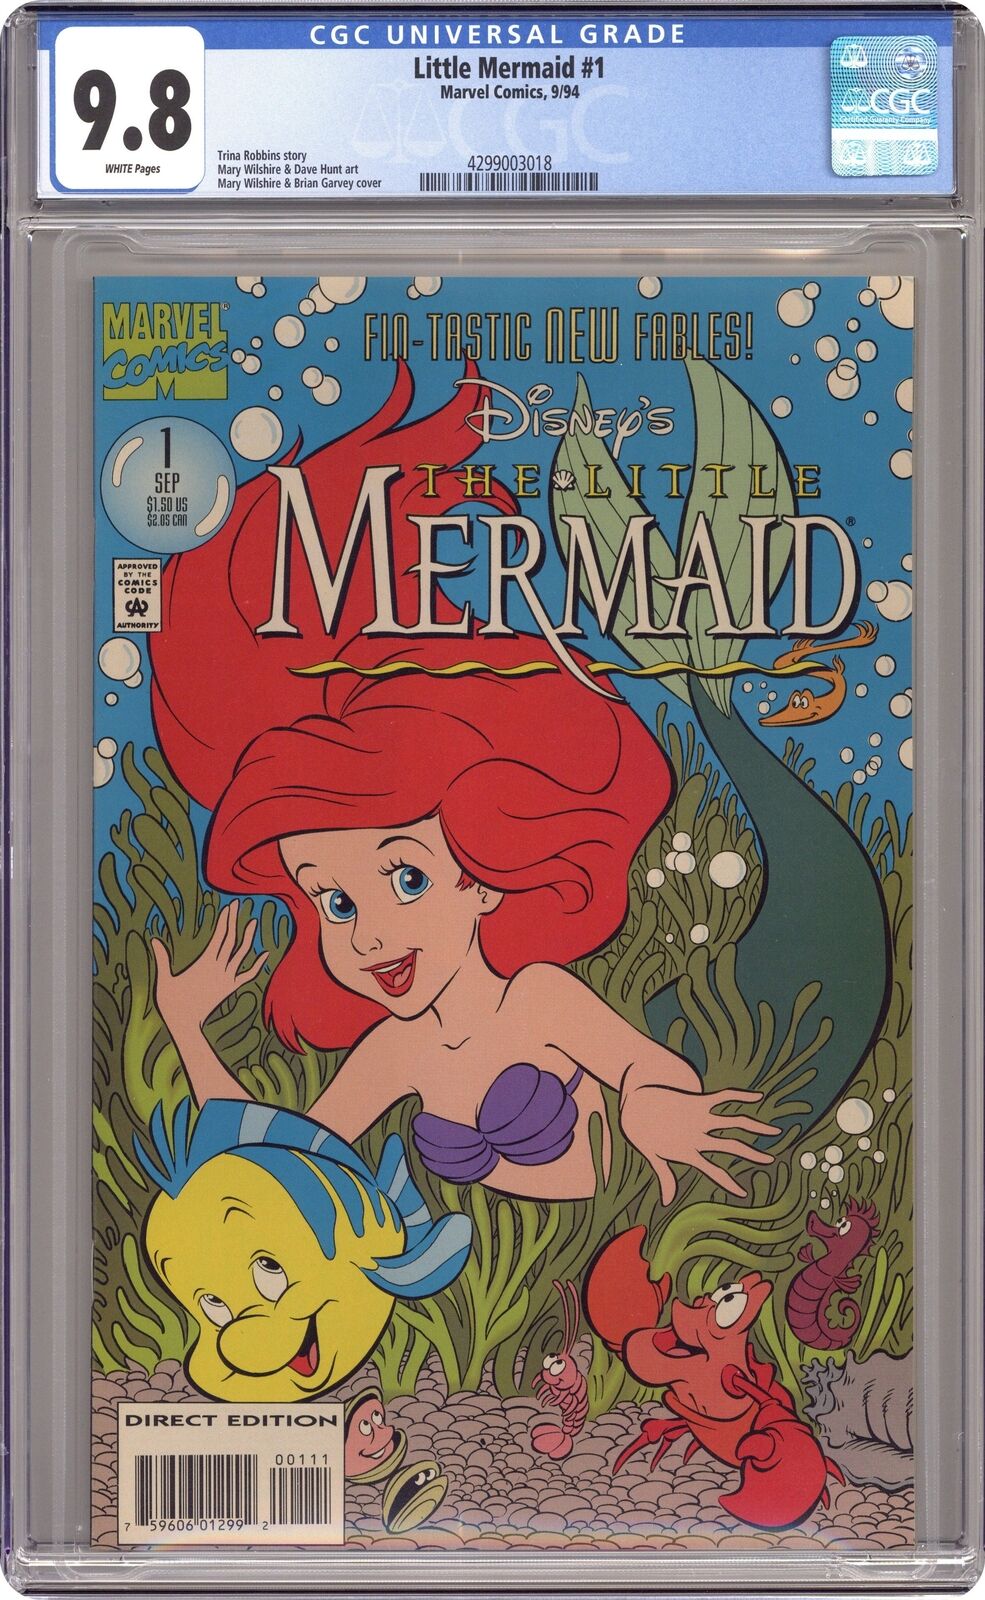 Little Mermaid #1 CGC 9.8 1994 4299003018